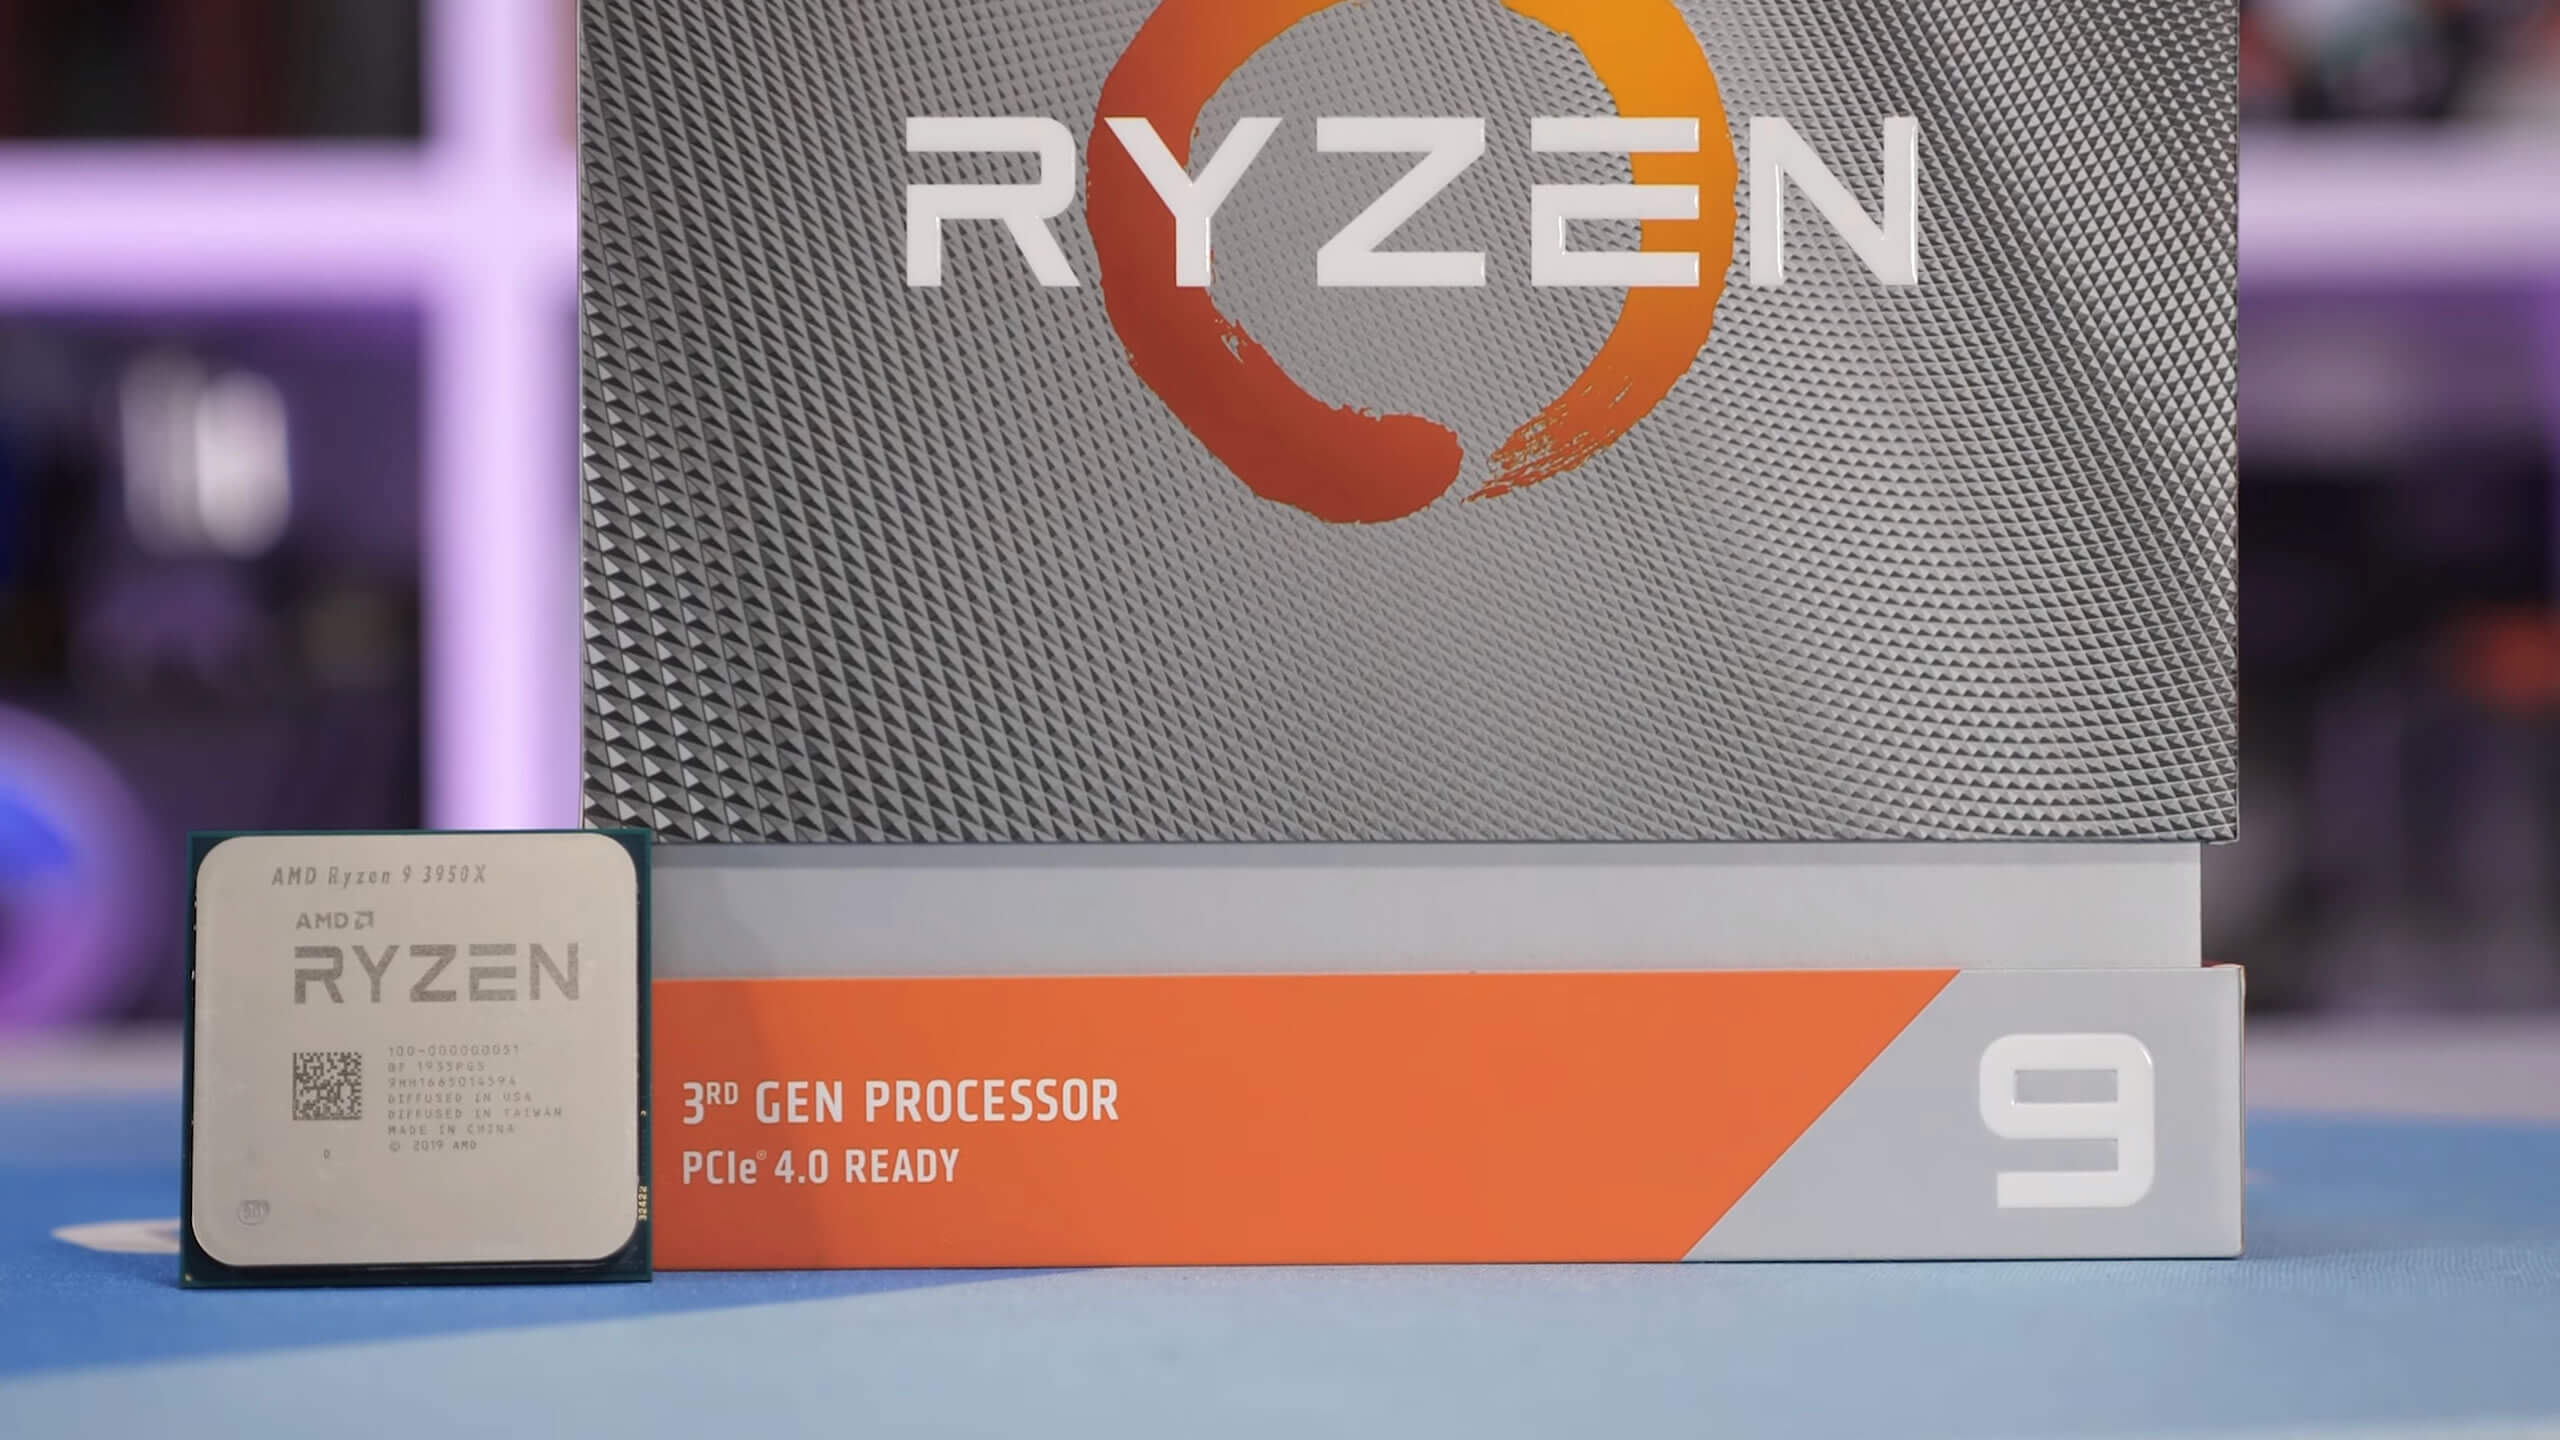 AMD Ryzen 9 3950X Review: The New Performance King | TechSpot